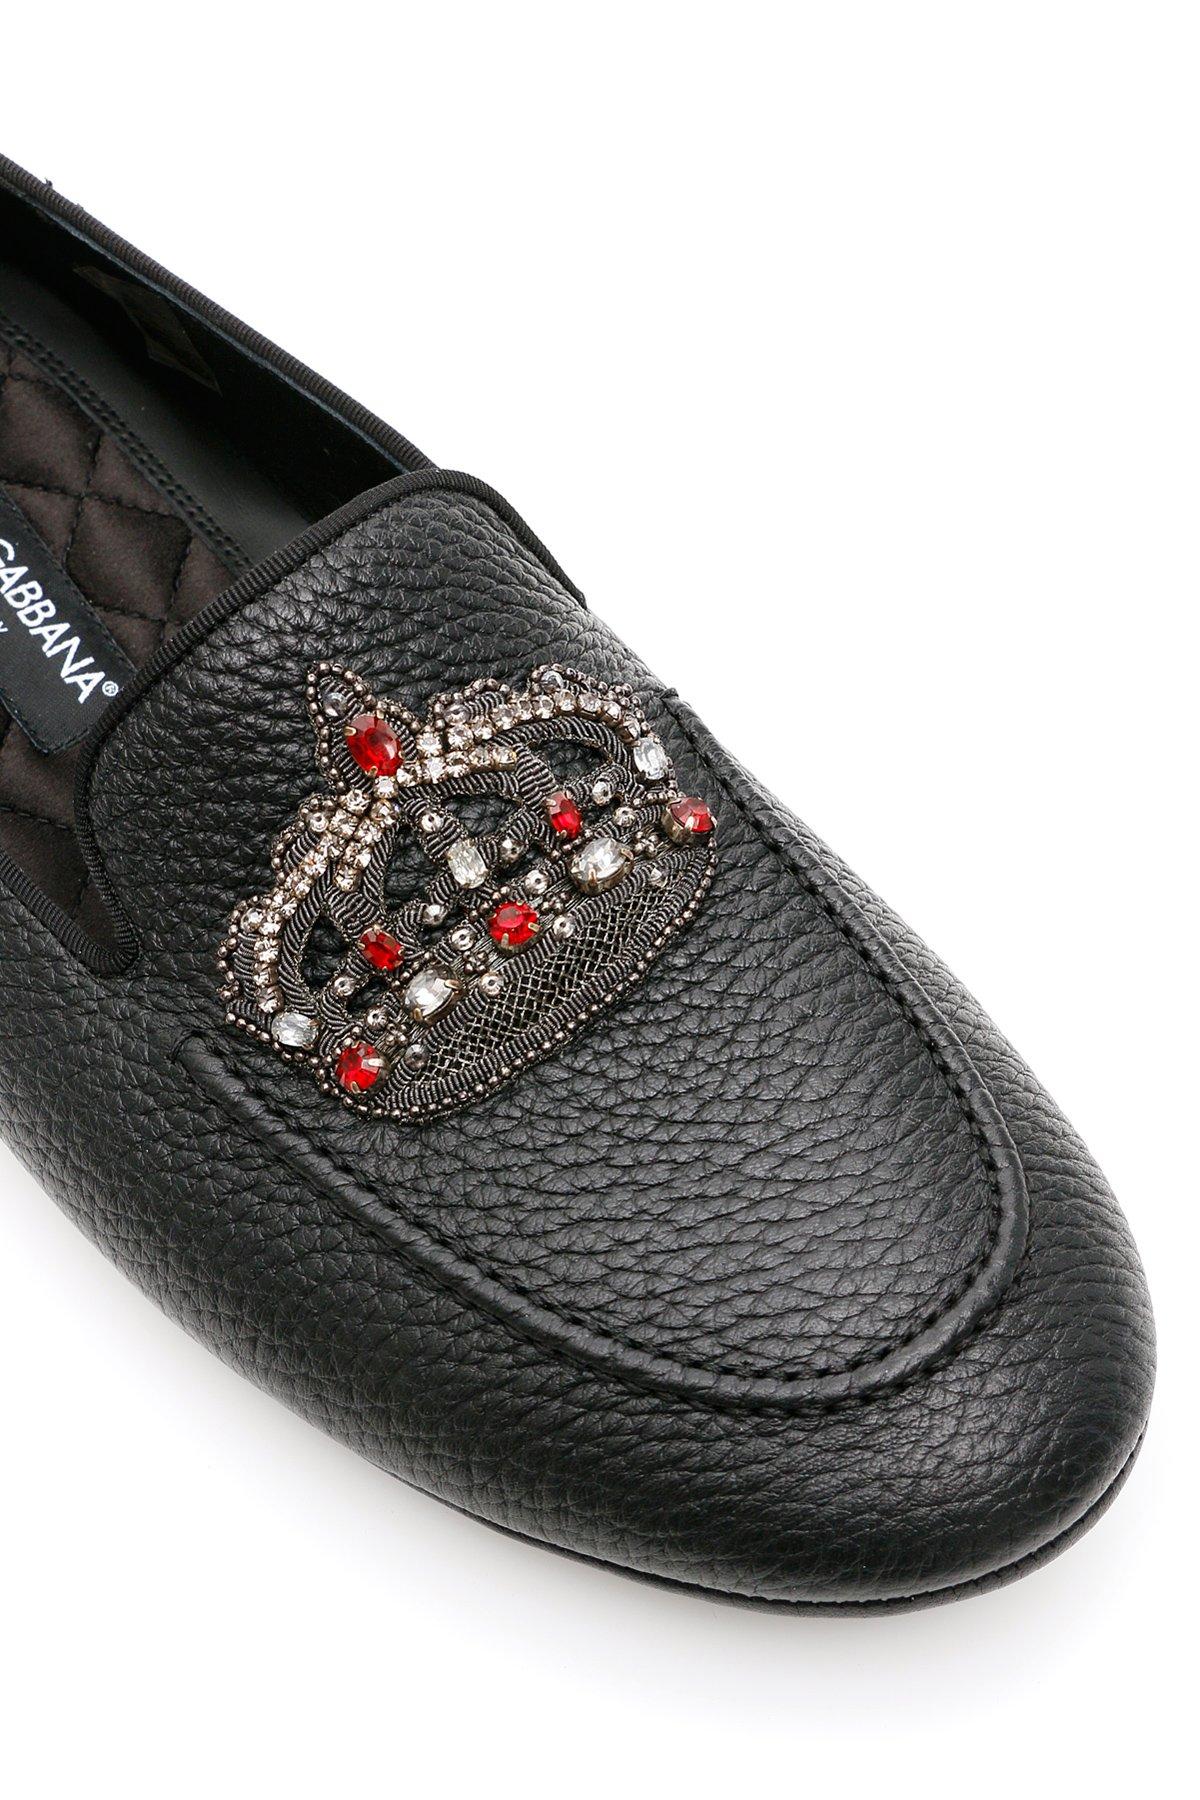 Dolce & Gabbana Leather Dg Crown Logo Embellished Loafers in Black for ...